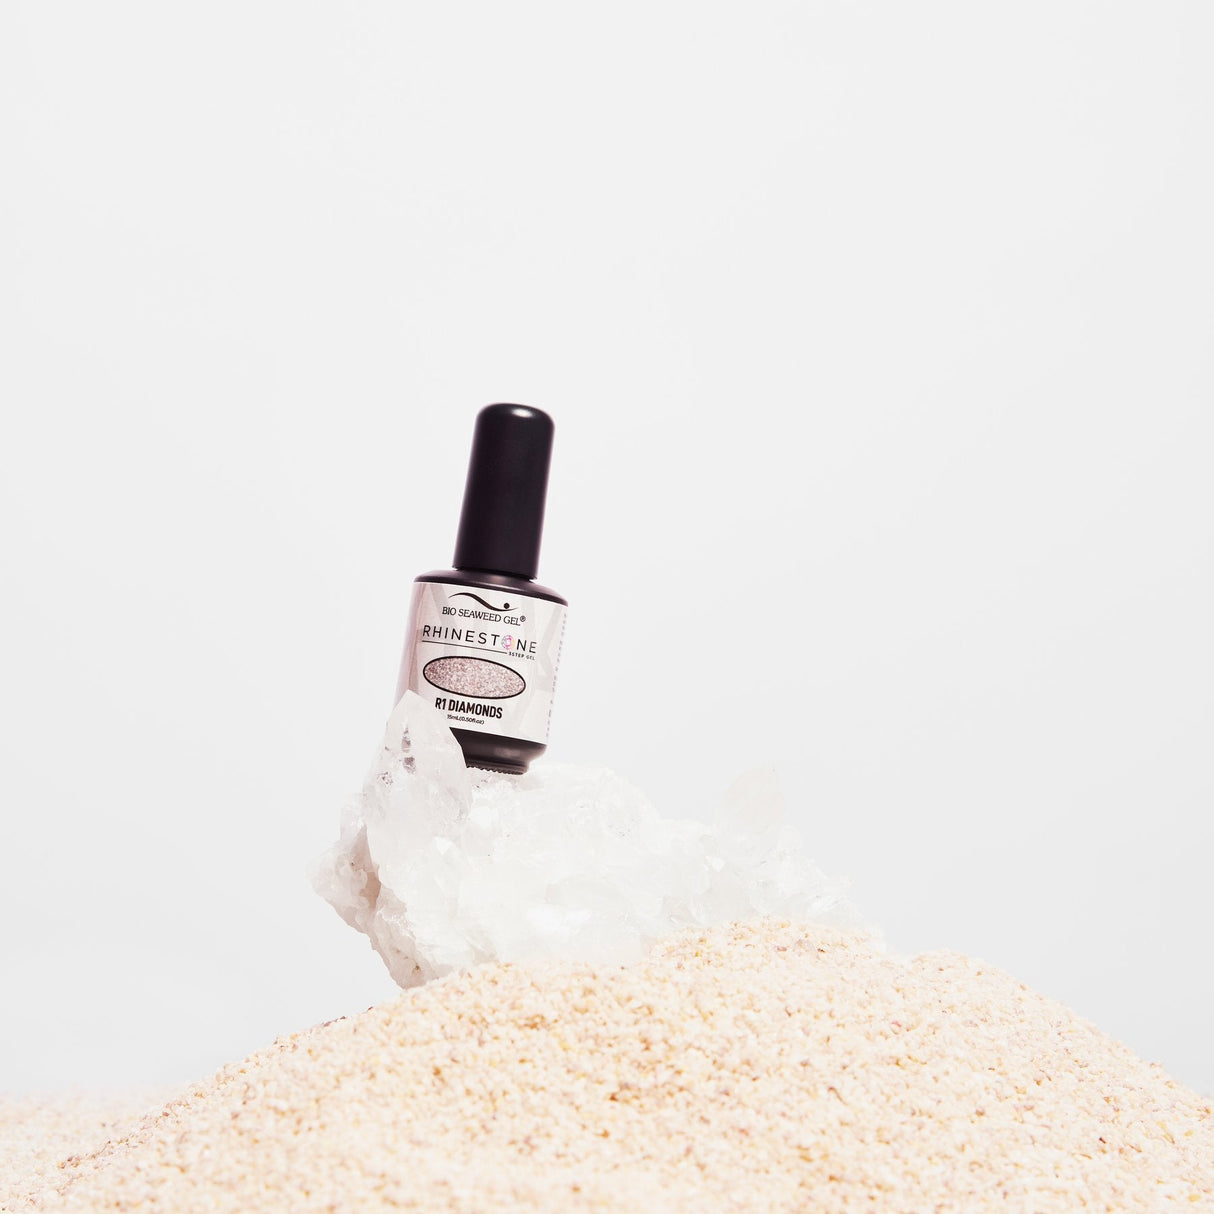 Rhinestone Gel Bio Seaweed - #R1 Diamonds - Jessica Nail & Beauty Supply - Canada Nail Beauty Supply - Sparkle Gel